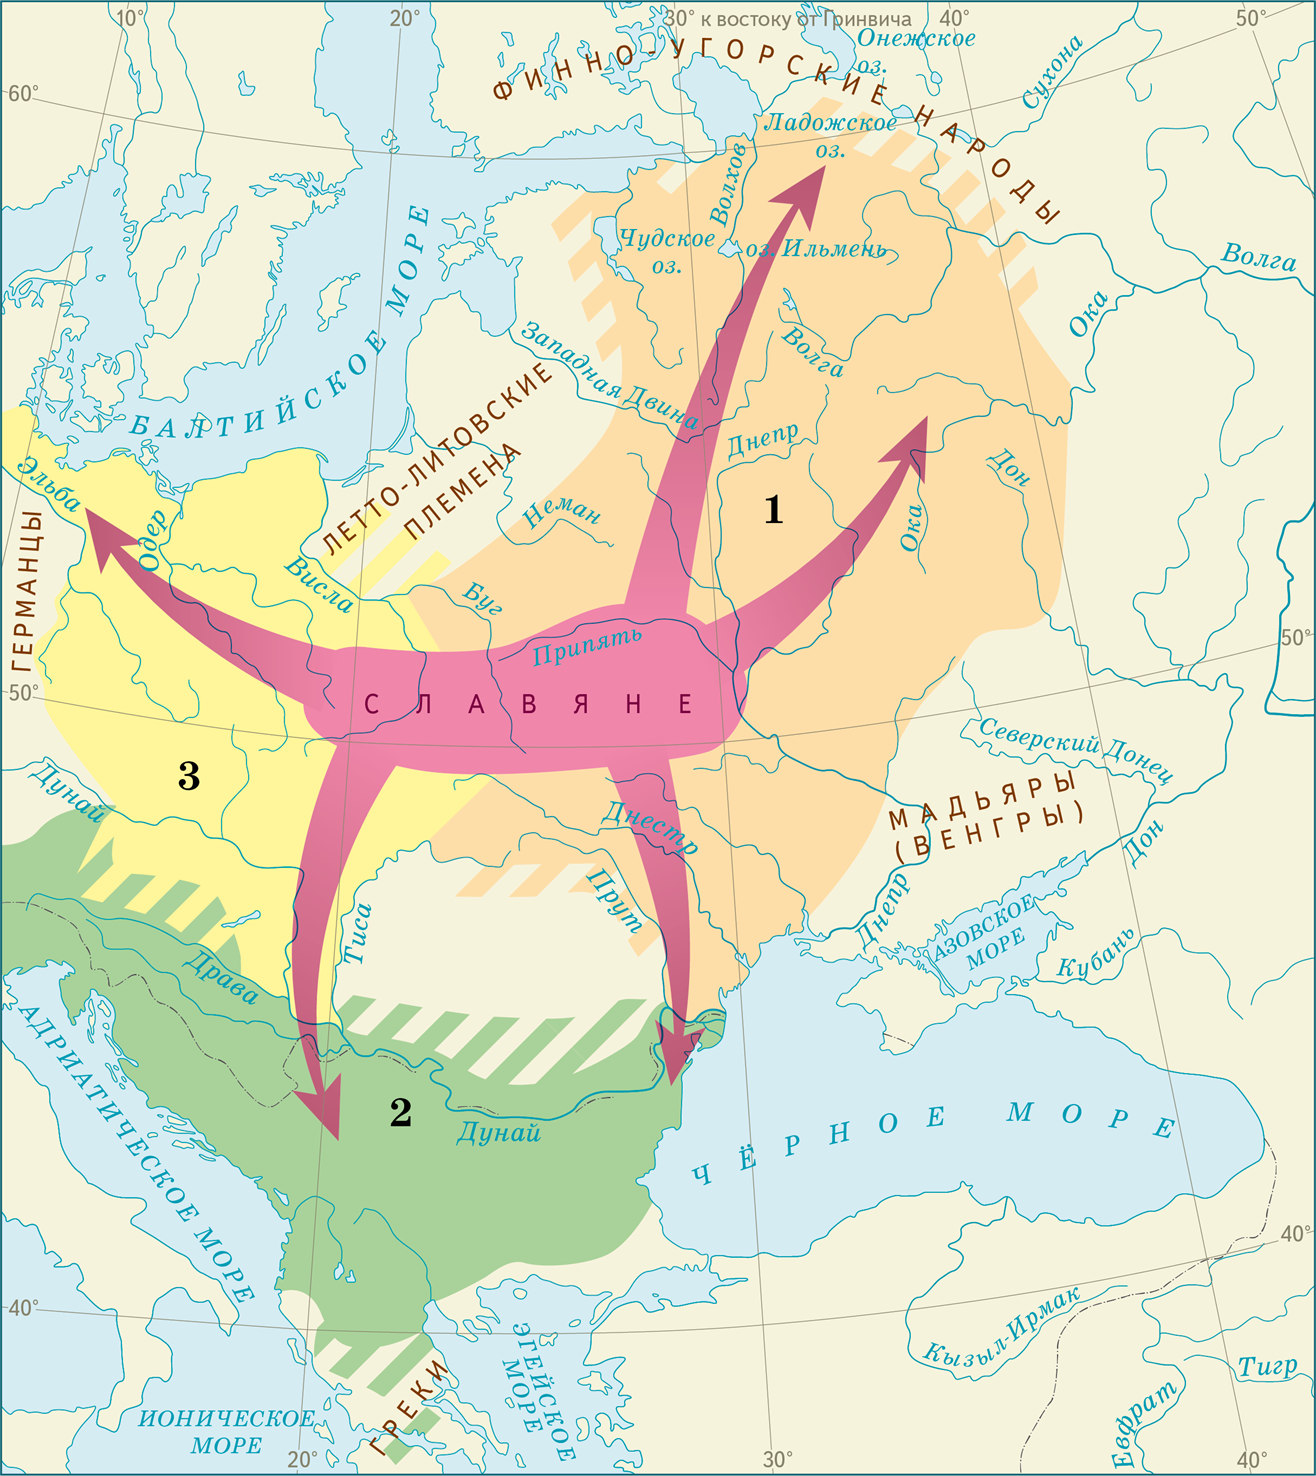 Включи расселение. Территории расселения славянских племен на карте. Карта миграции славян. Карта расселения славян в 6 веке. Карта расселения древних славян.